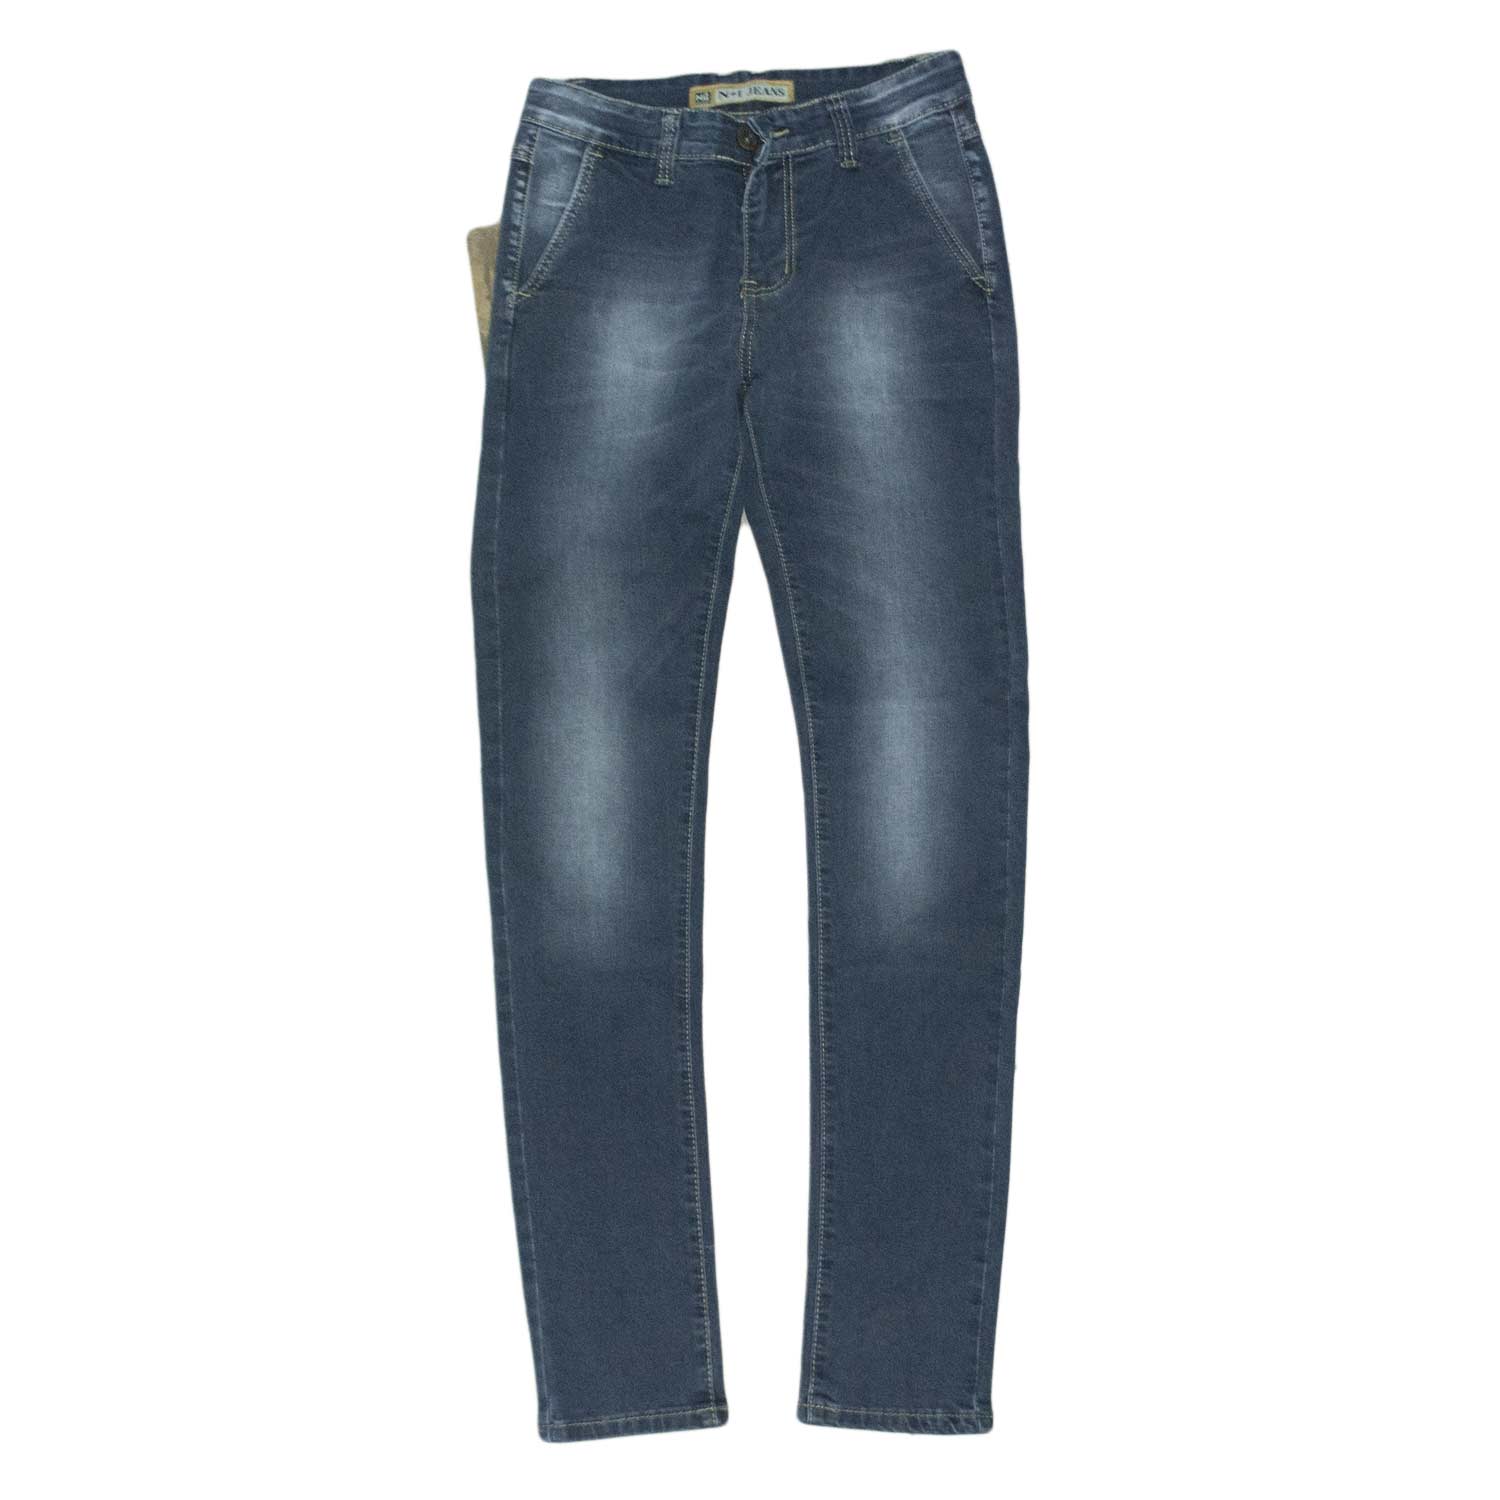 jeans man uomo blu moda made in italy.